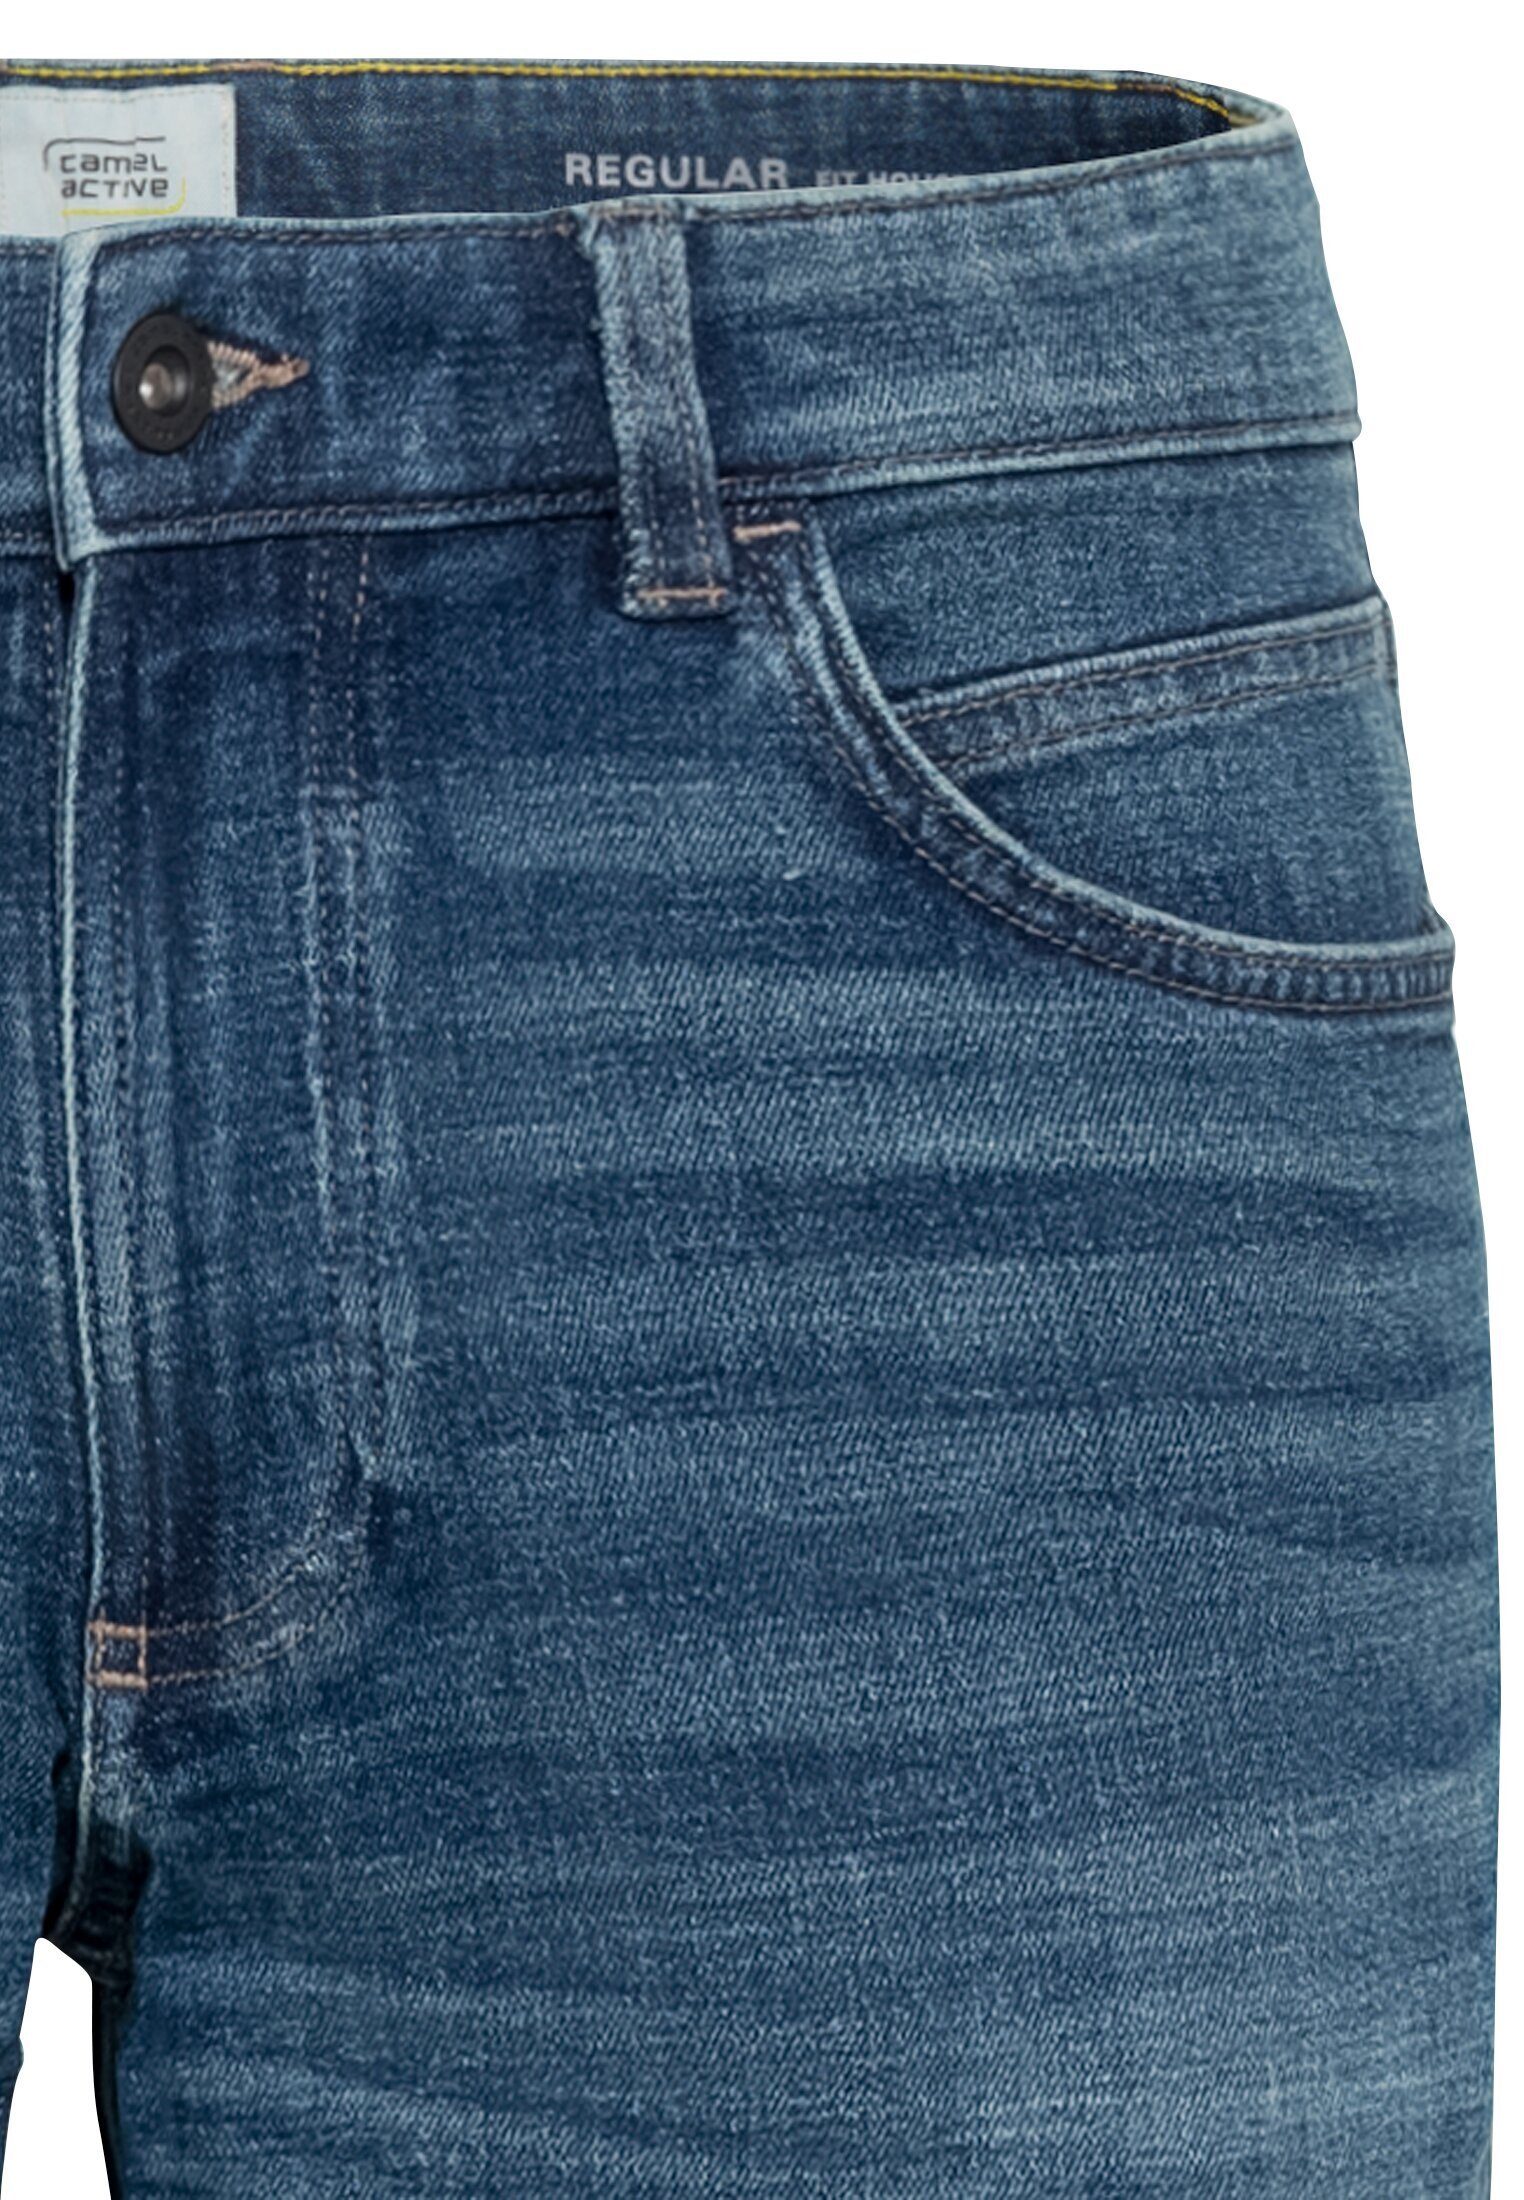 camel active 5-Pocket-Jeans 5-Pocket Fit fleXXXactive® Regular Jeans